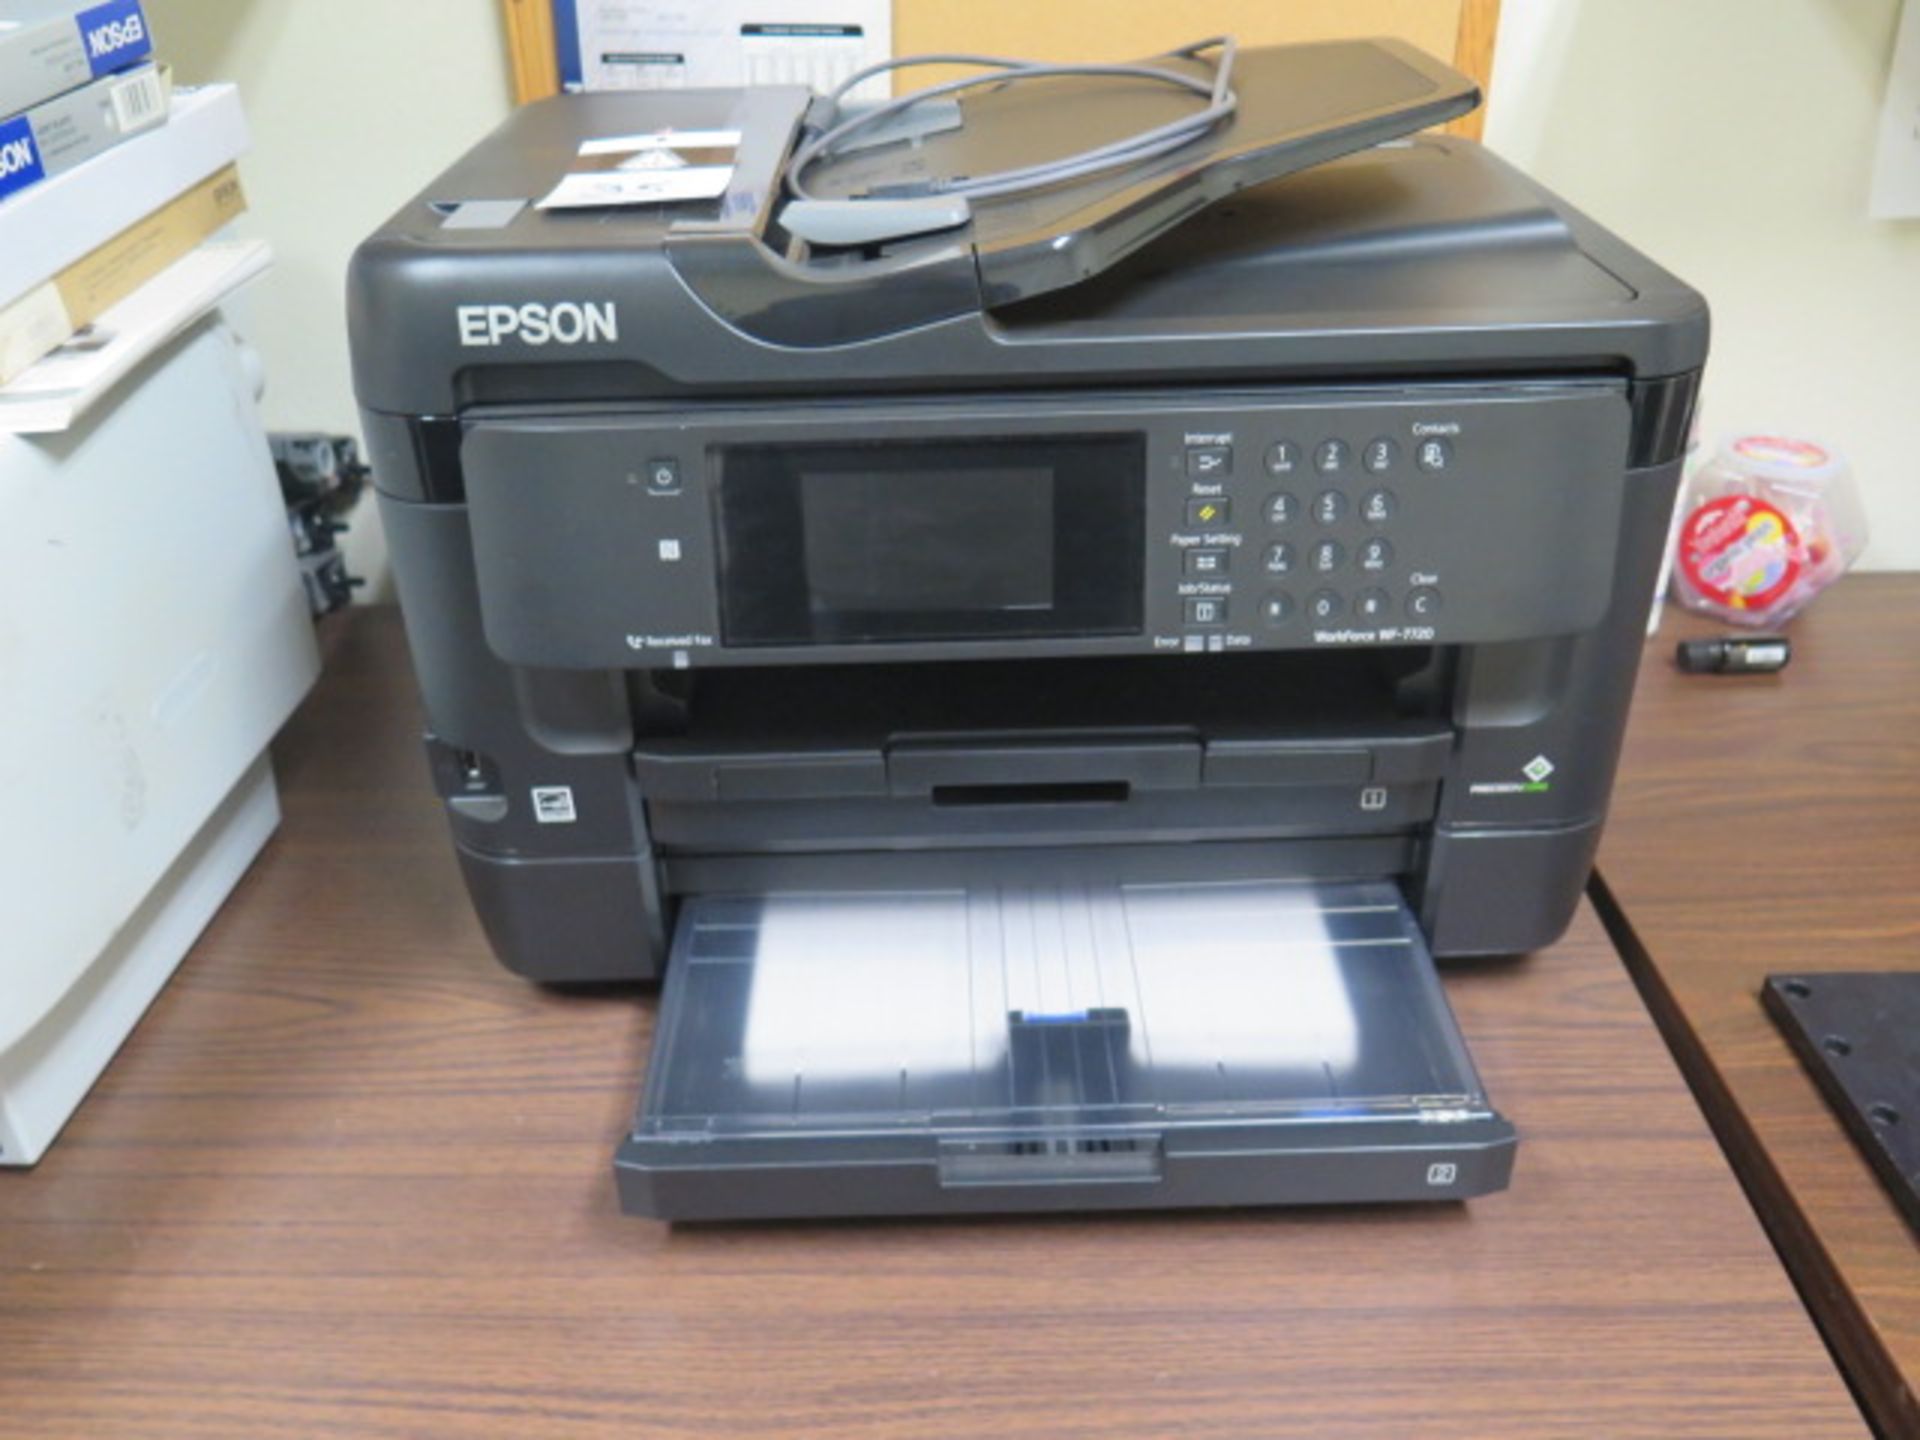 Epson WorkForce WF-7720 Printer (SOLD AS-IS - NO WARRANTY)